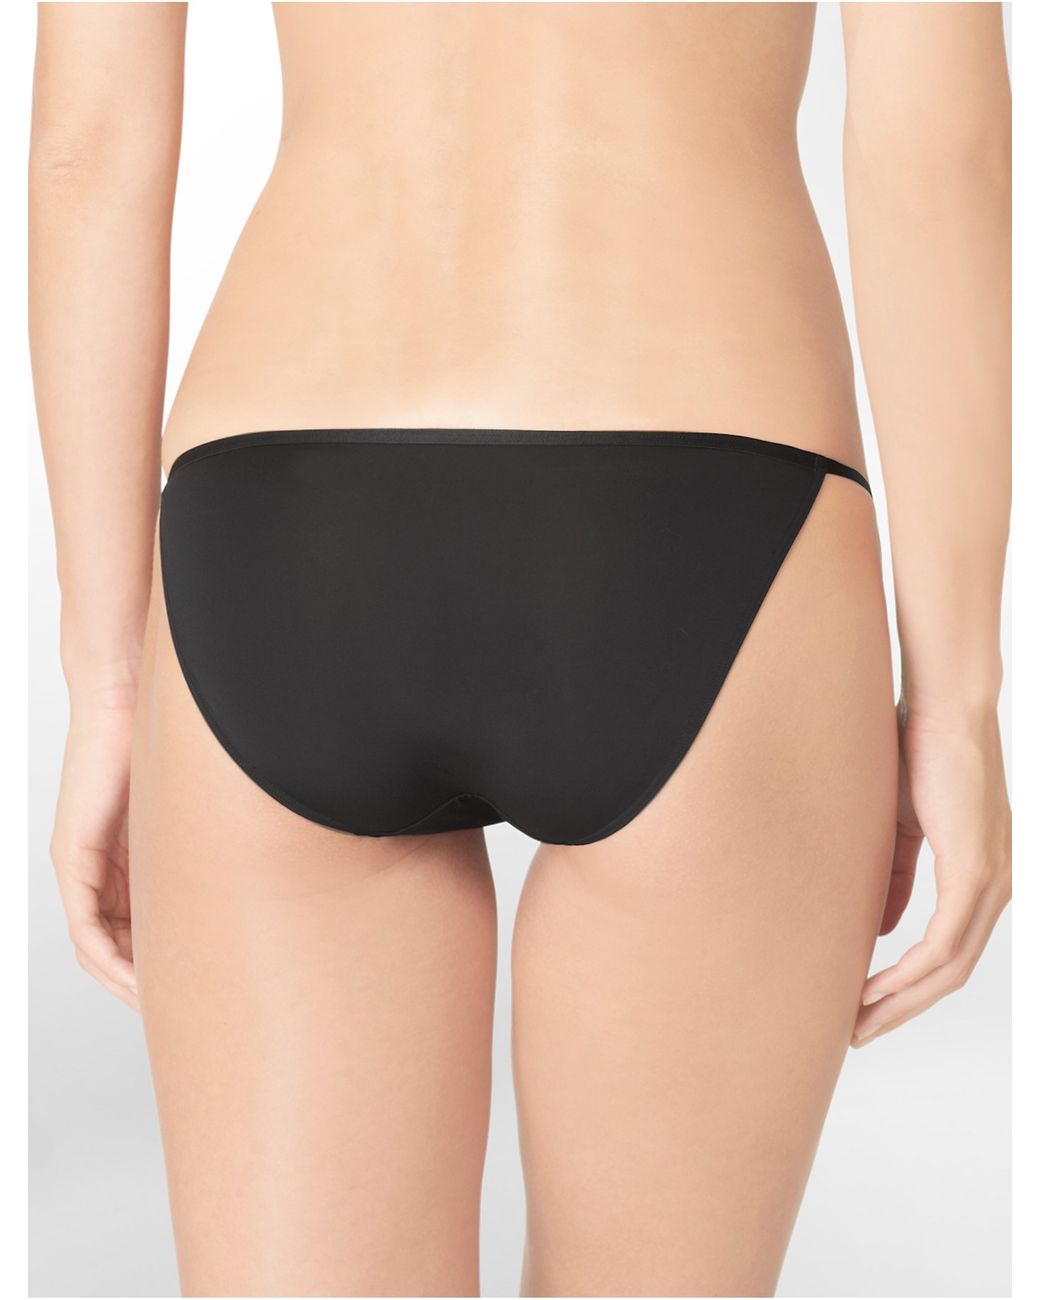 Calvin Klein Underwear Sleek String Bikini in Black | Lyst